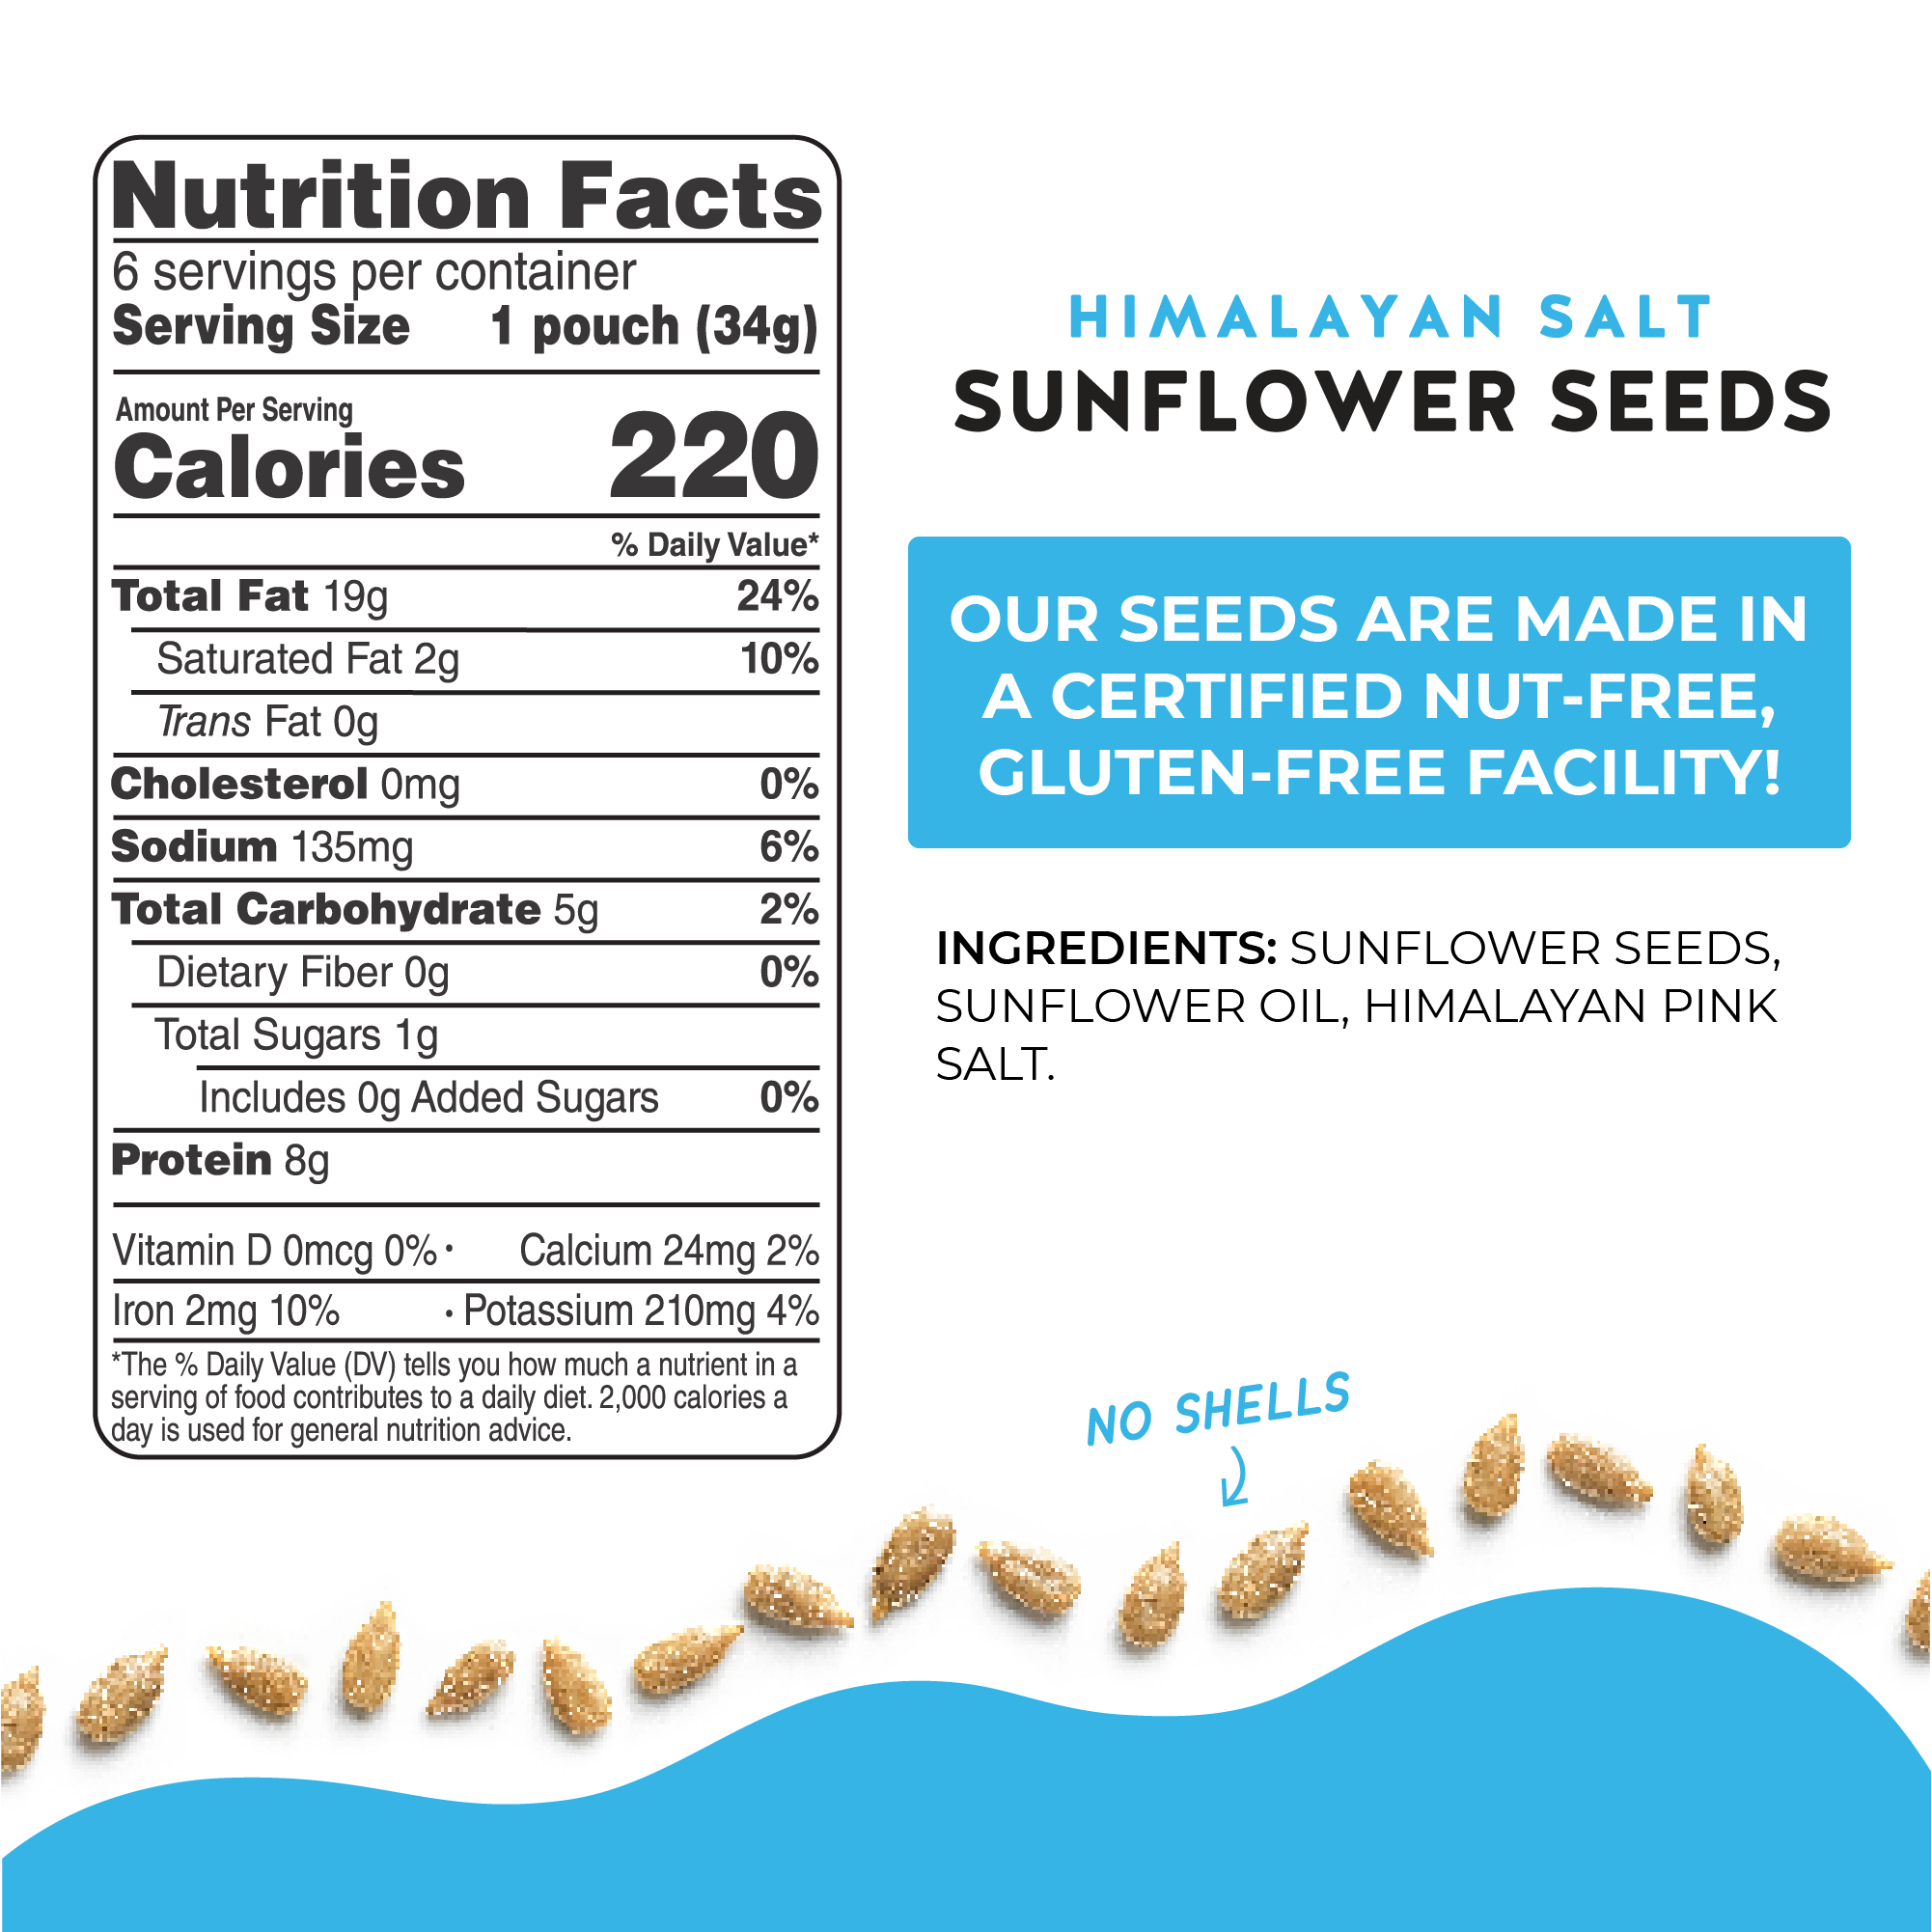 Blake's Seed Based Himalayan Salt Sunflower Seeds - 6ct 12 units per case 7.2 oz